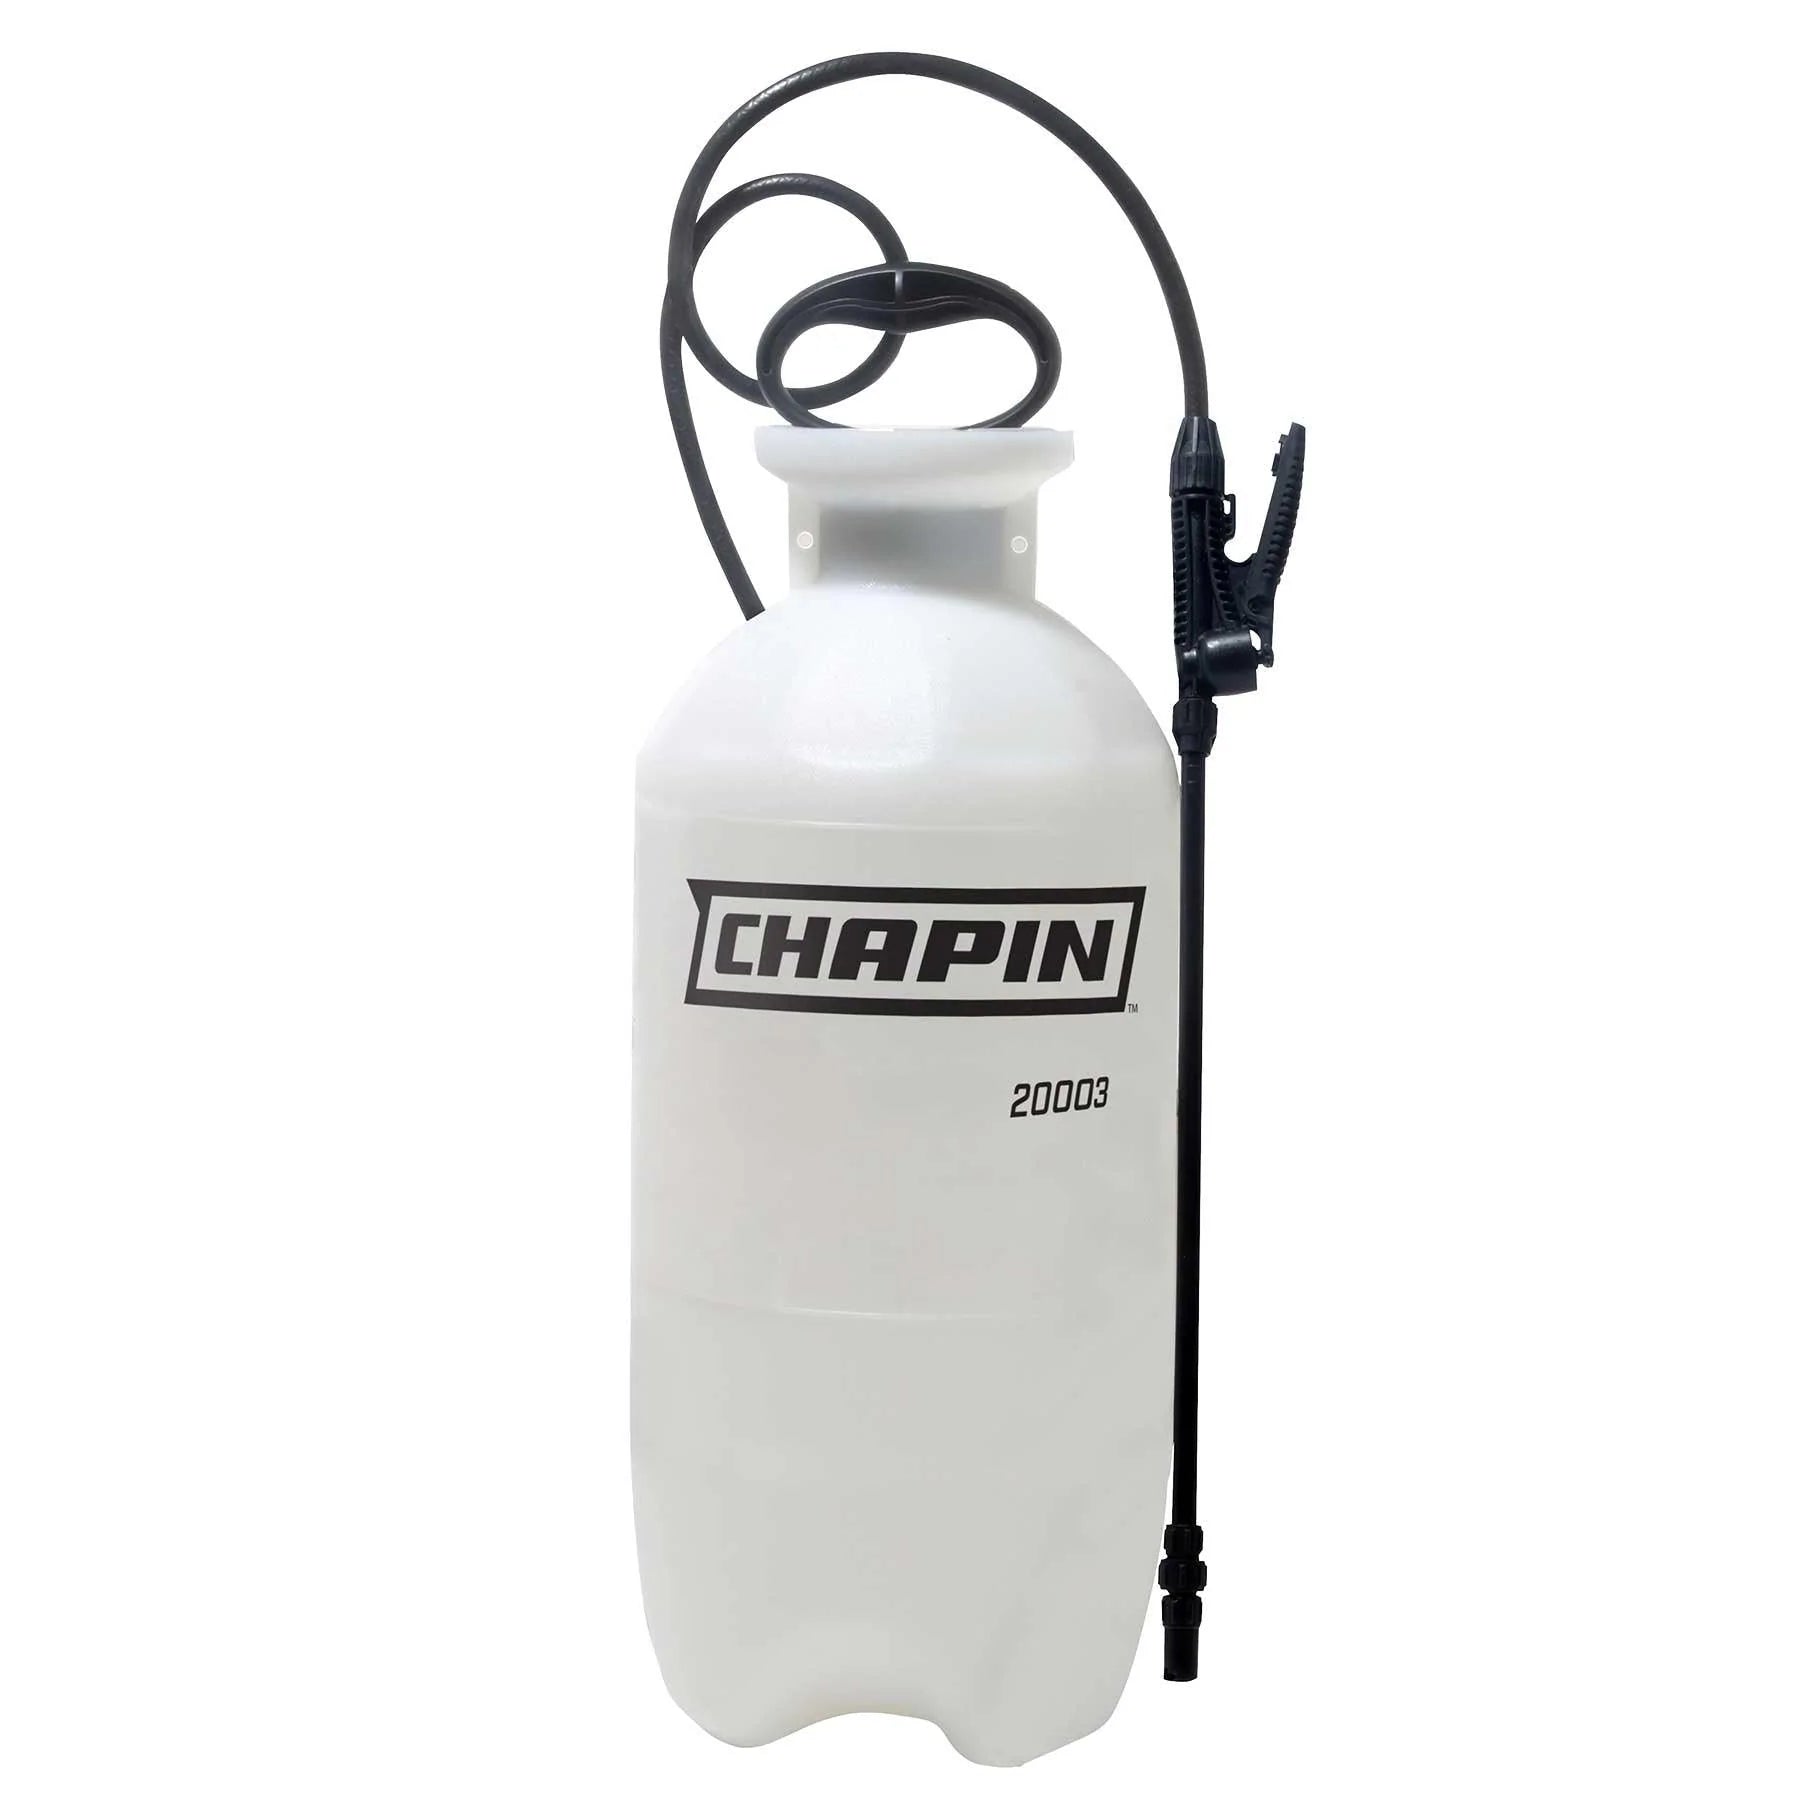 FOSHIO Car Wash Foam Pump Sprayer 0.4 Gallon, Hand Pump Pressure Sprayer  with Trigger Lock Water Sprayer for Car Detailing, Lawn and Garden